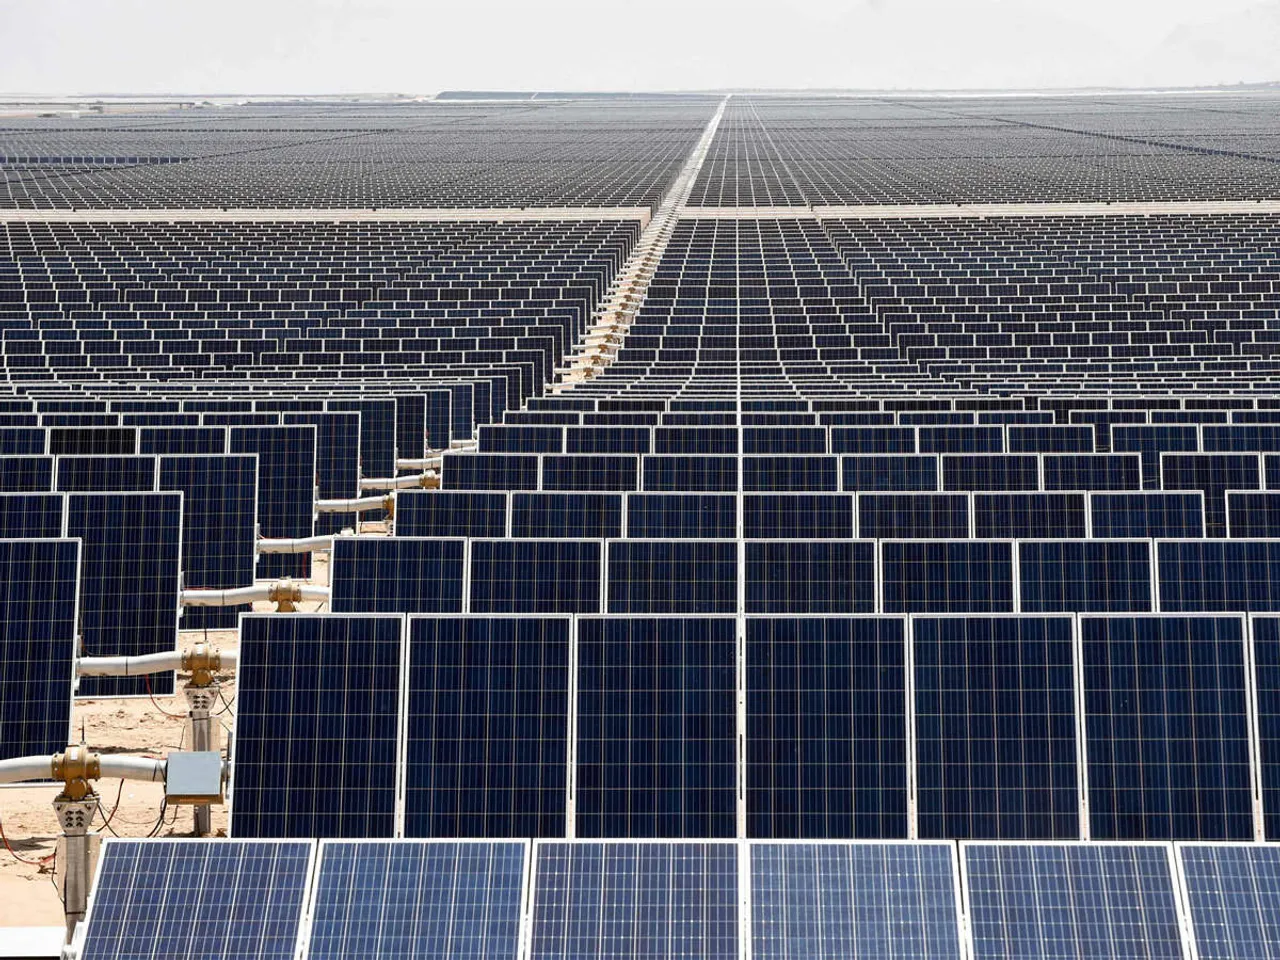 Juniper Green Energy commissions 105 MW Jalkot solar project, in Maharashtra